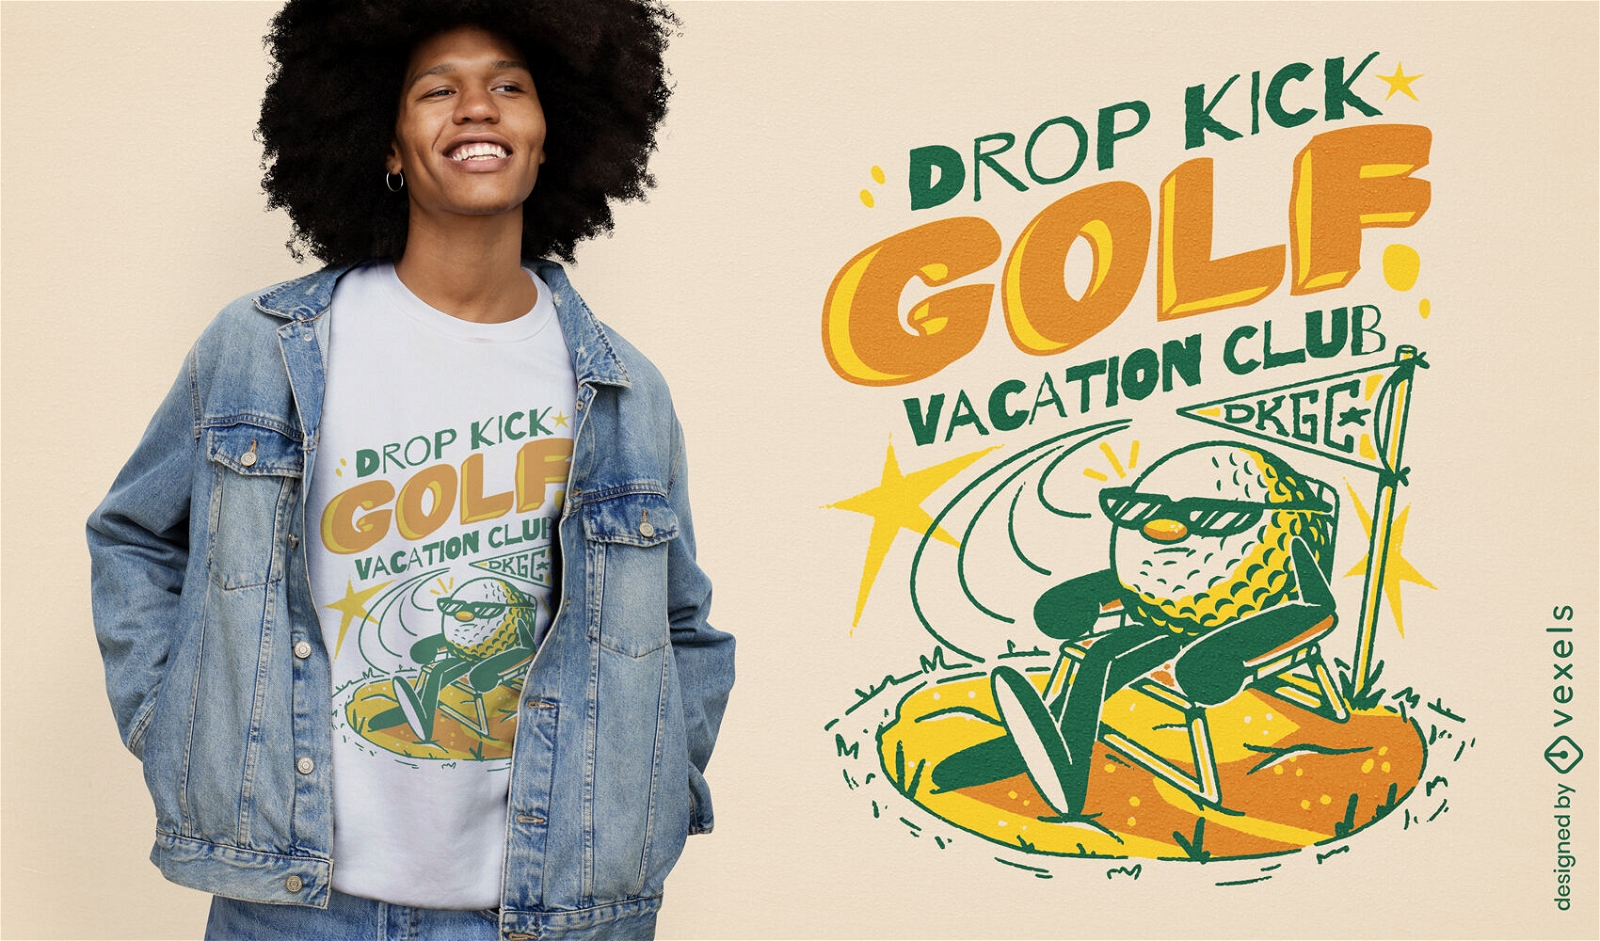 Dise?o de camiseta Drop Kick Golf Vacation Club.